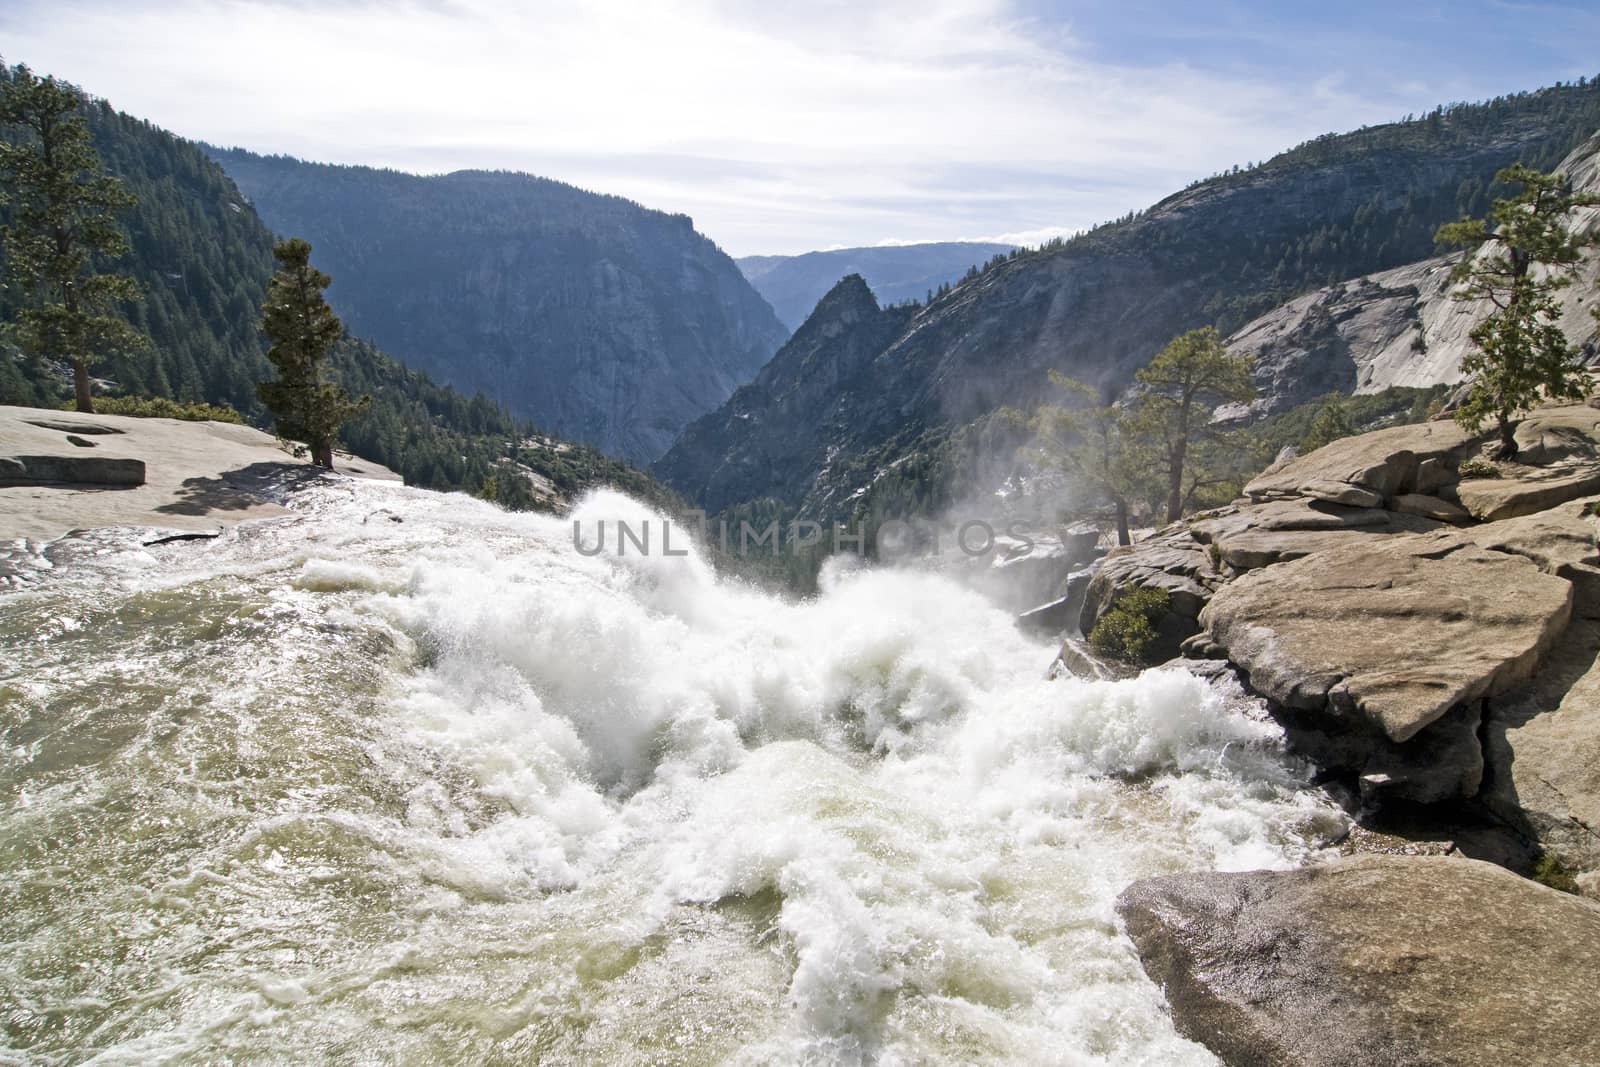 Nevada Falls (Merced River) in Yosemite National Park, CA